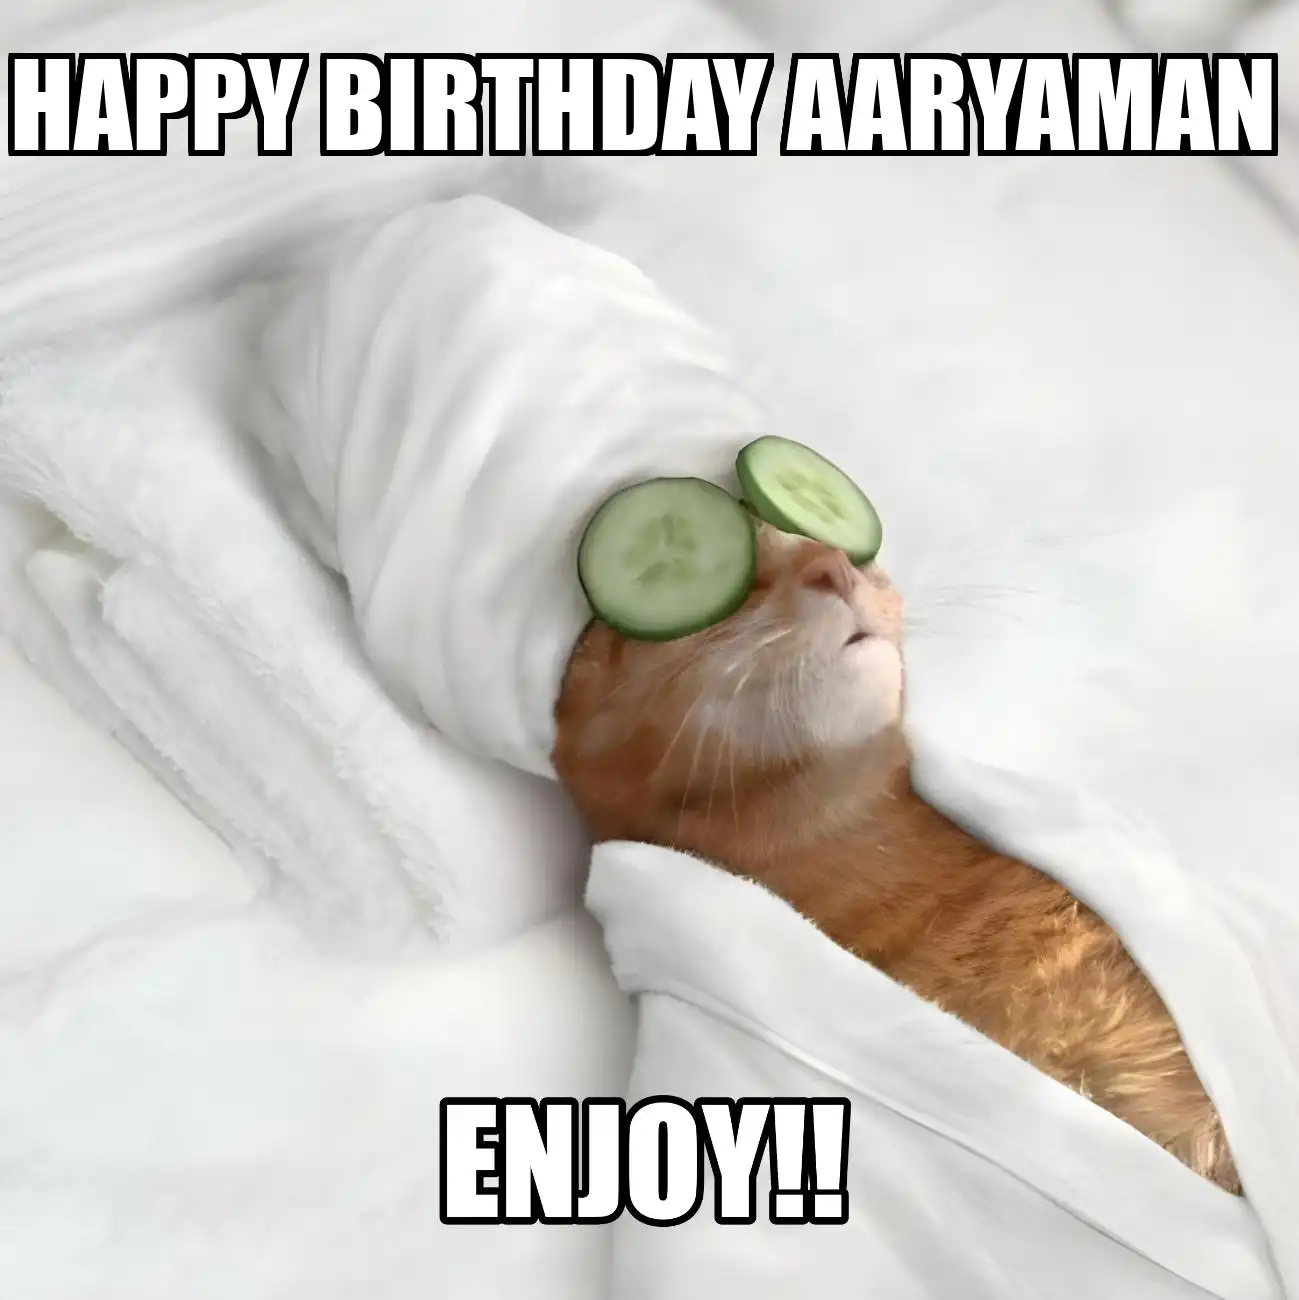 Happy Birthday Aaryaman Enjoy Cat Meme